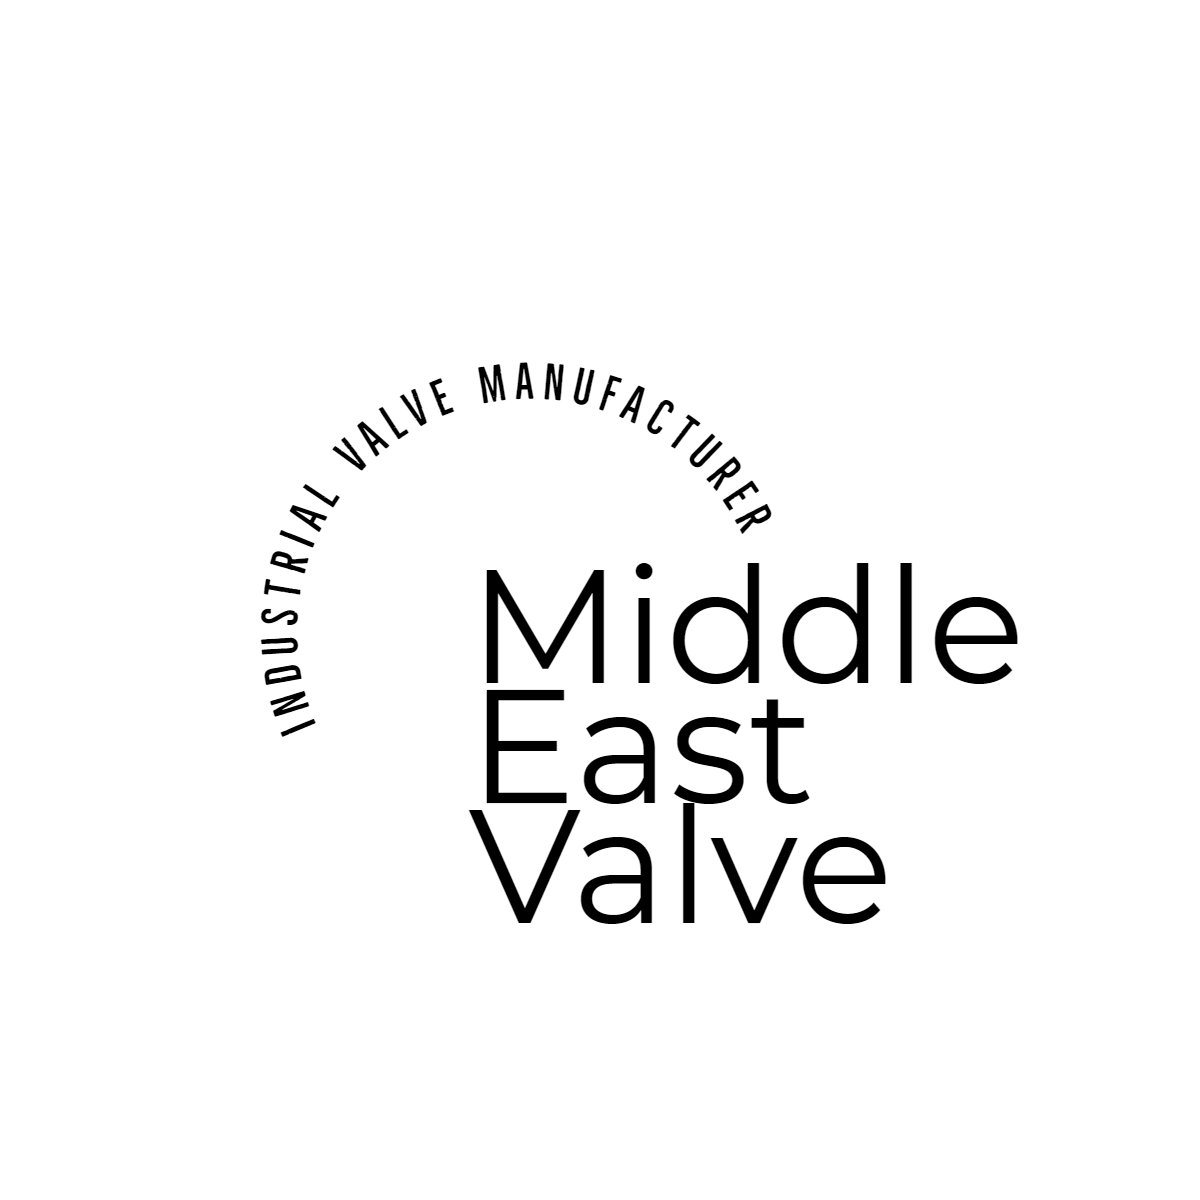 Ball valve supplier in UAE- Middleeast Valve- Deliver in MENA region